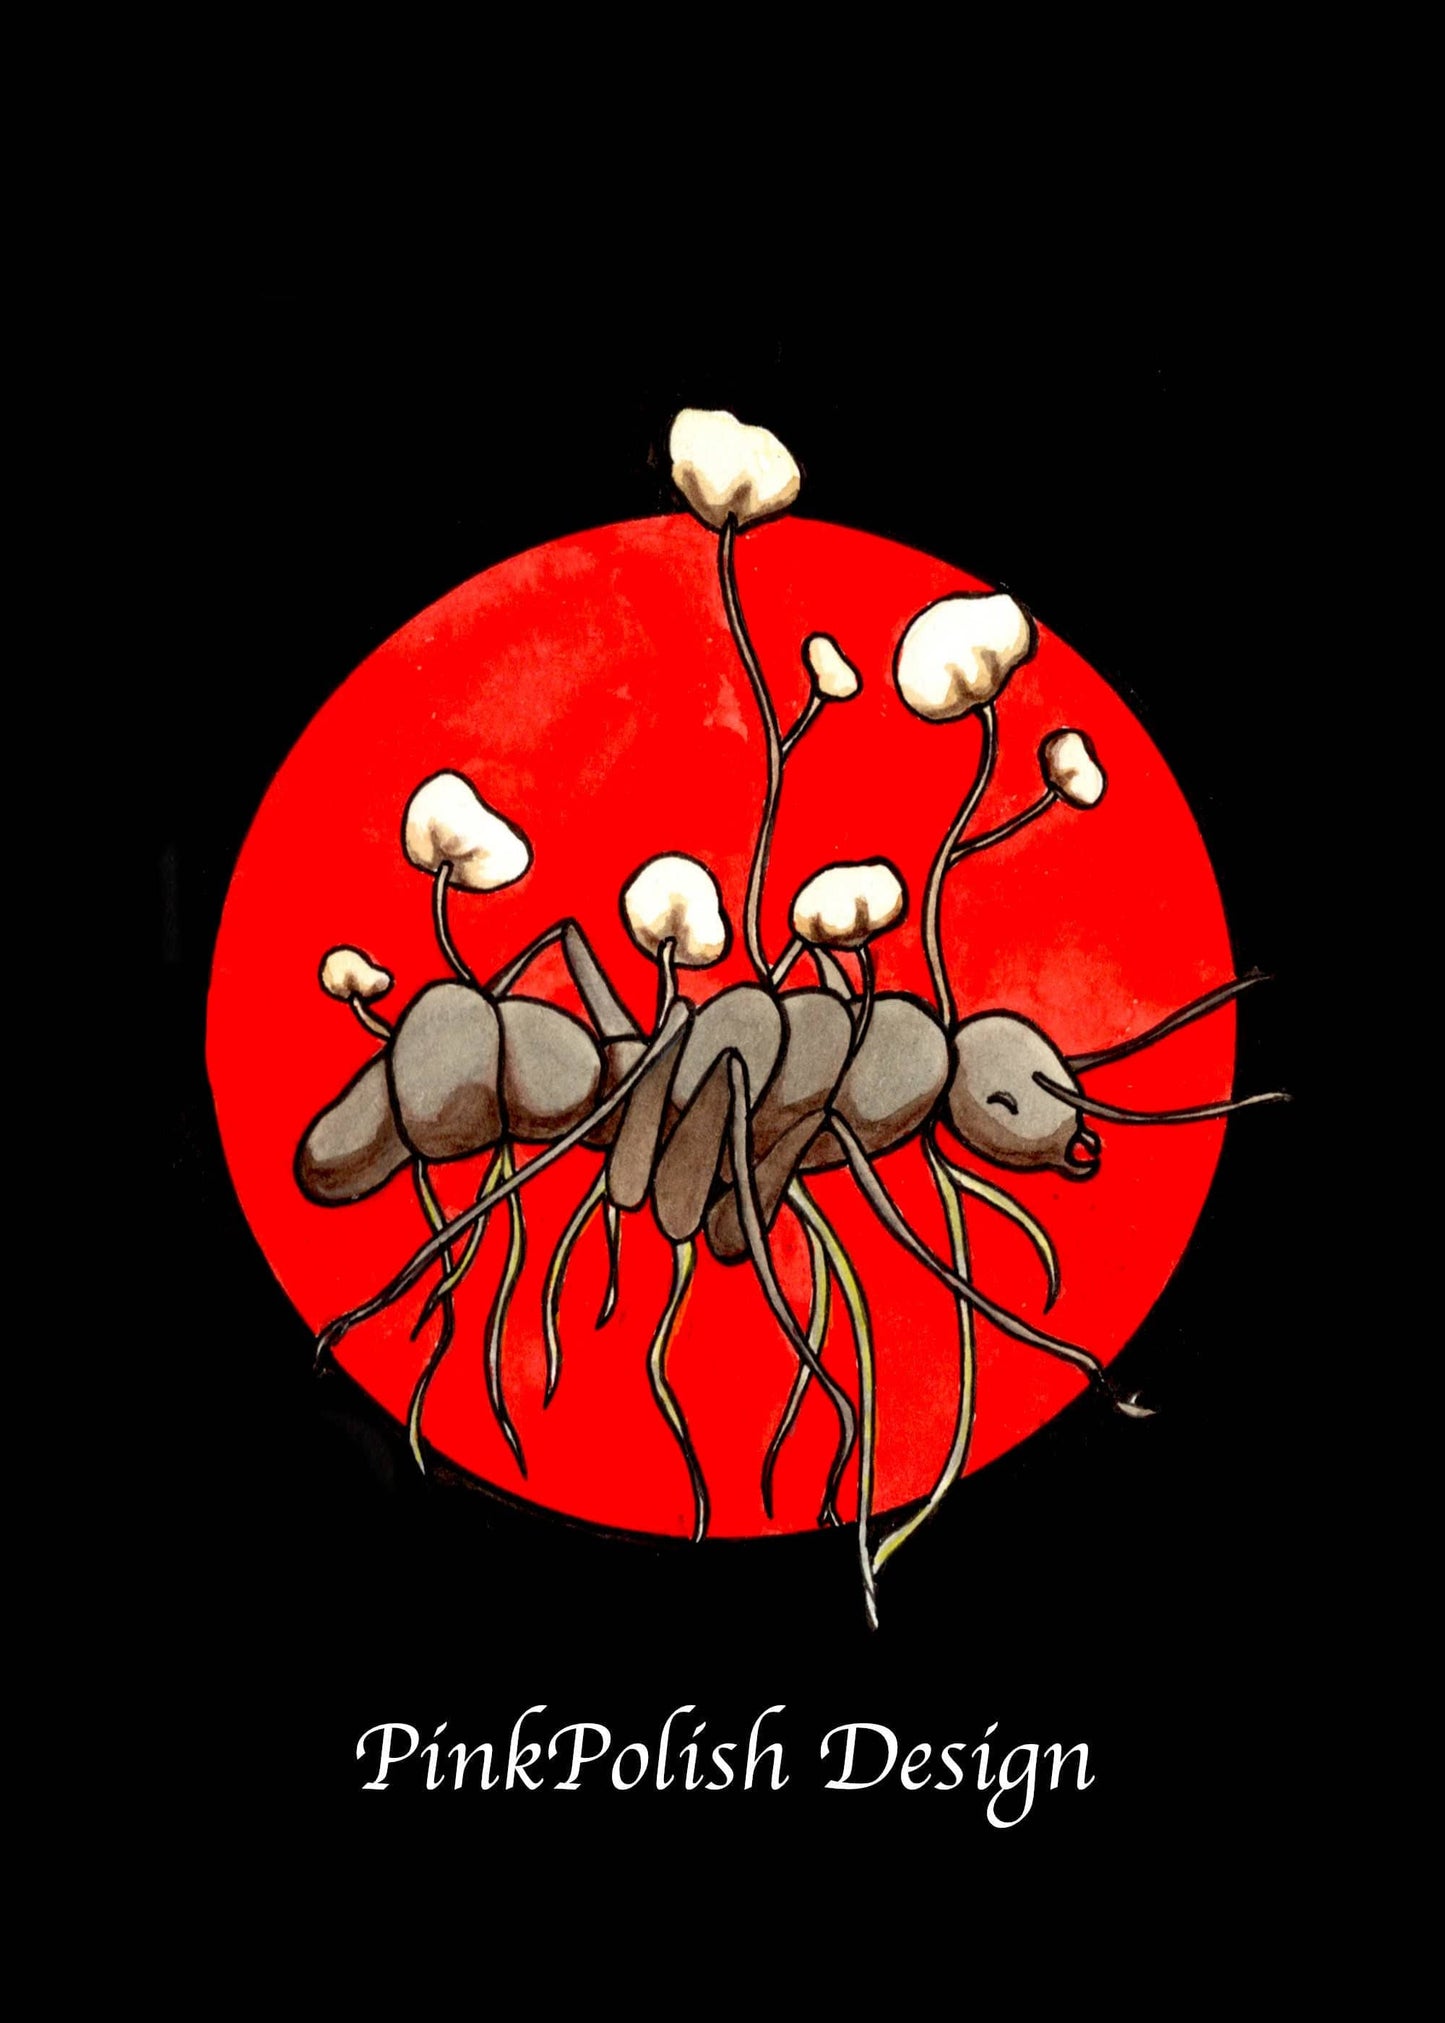 PinkPolish Design Art Prints "Zombie Ant" Watercolor Painting: Art Print